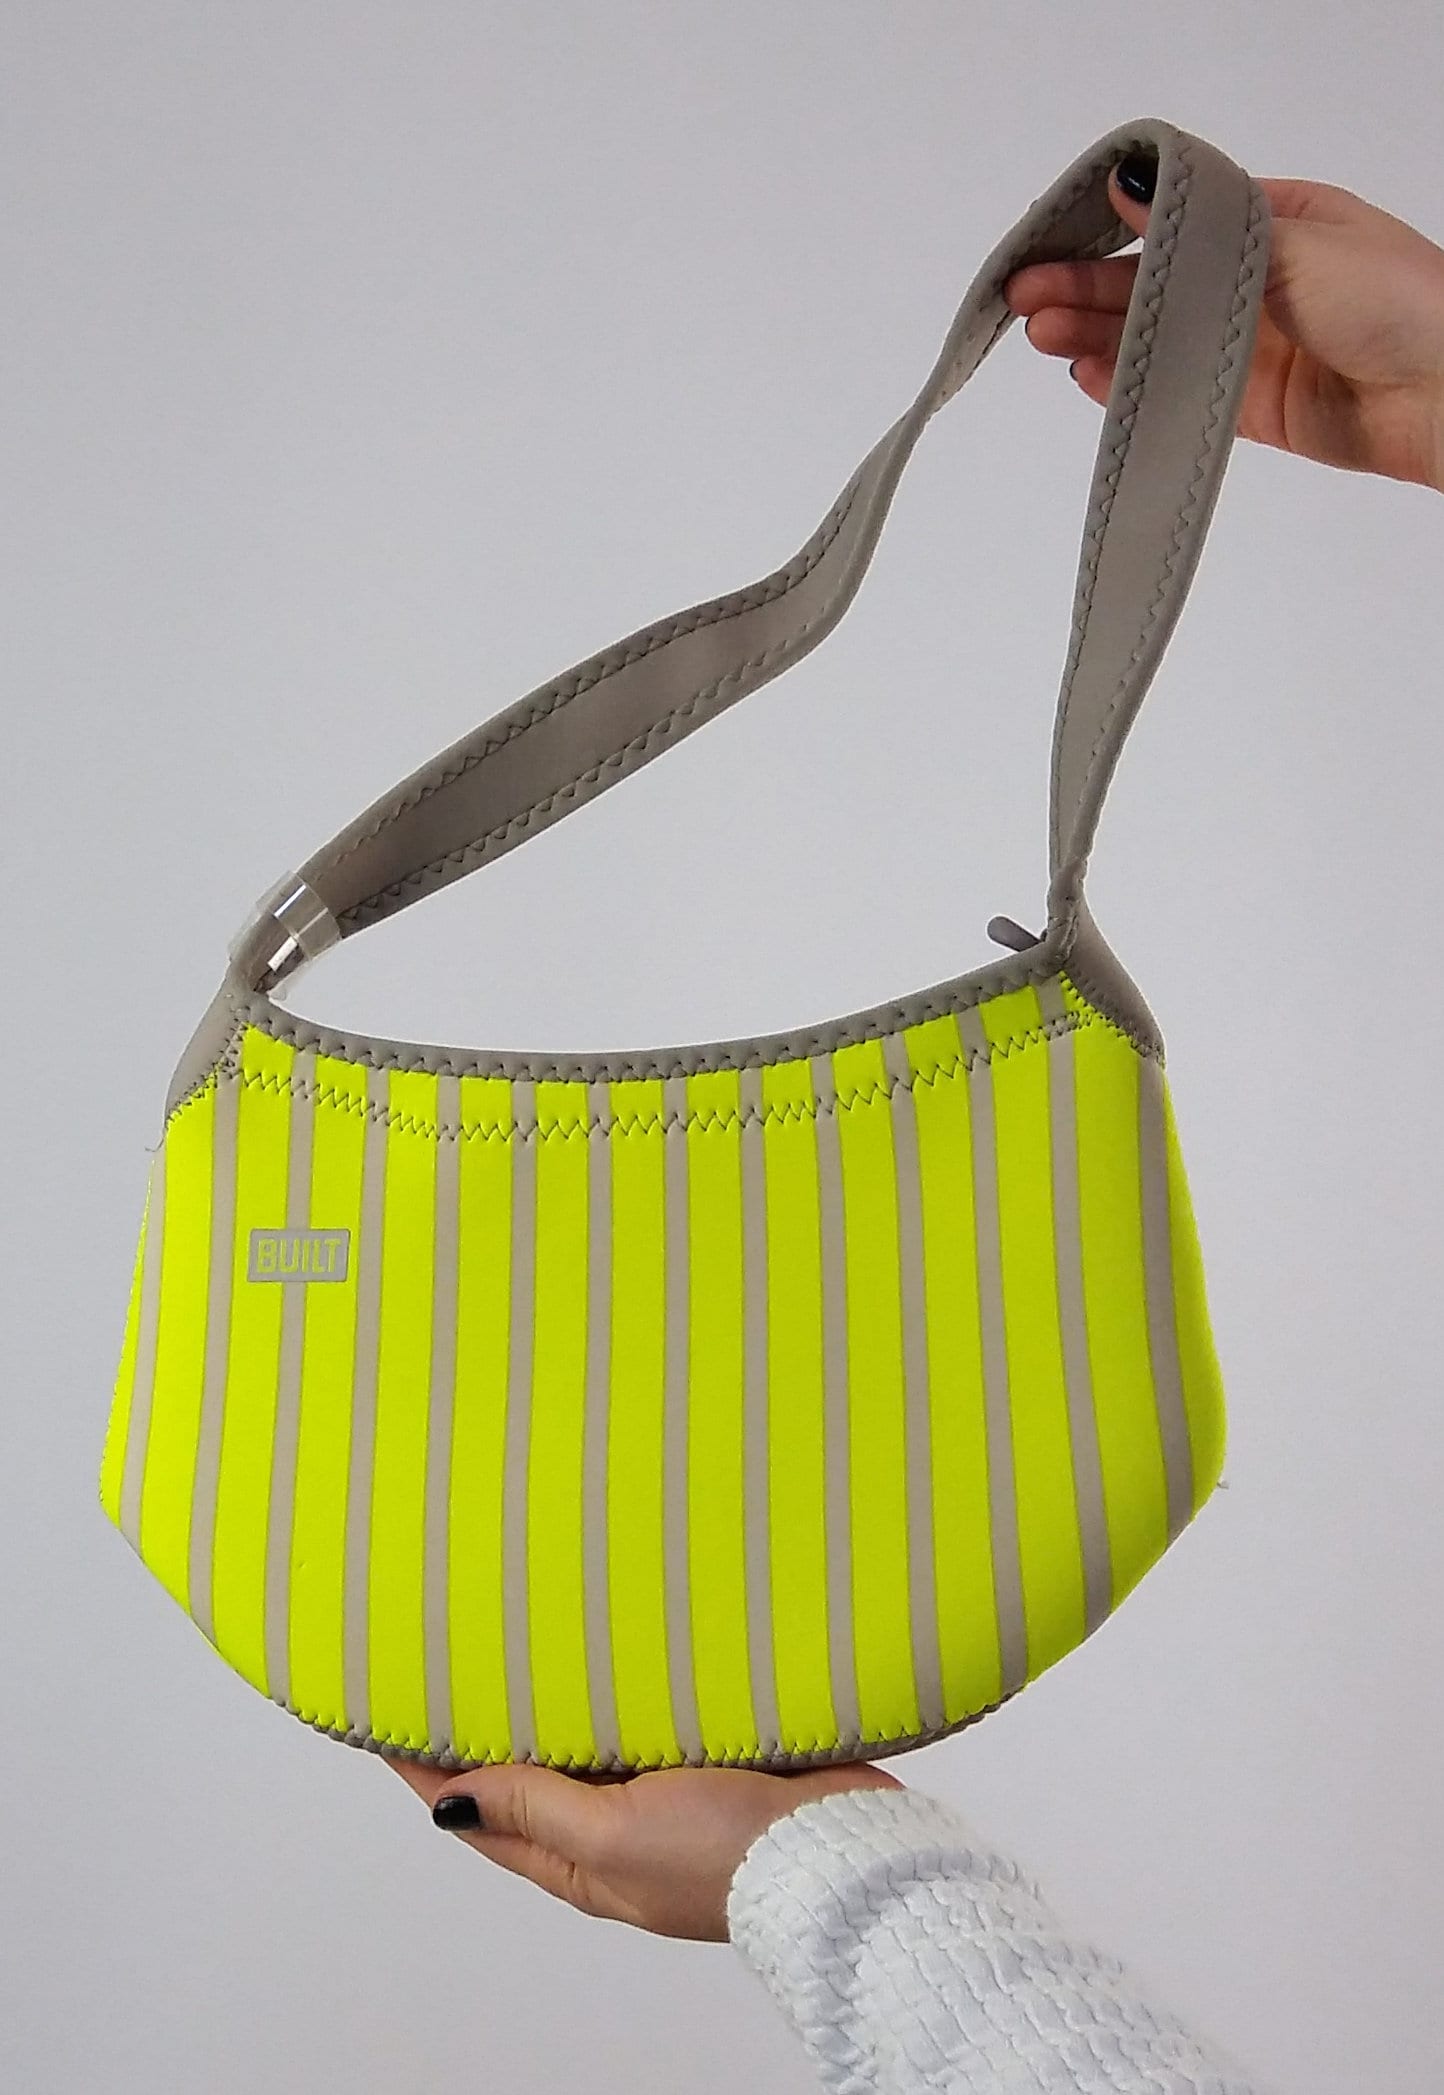 BUILT Neoprene Lunch Tote Bag Stripes Fluo Print